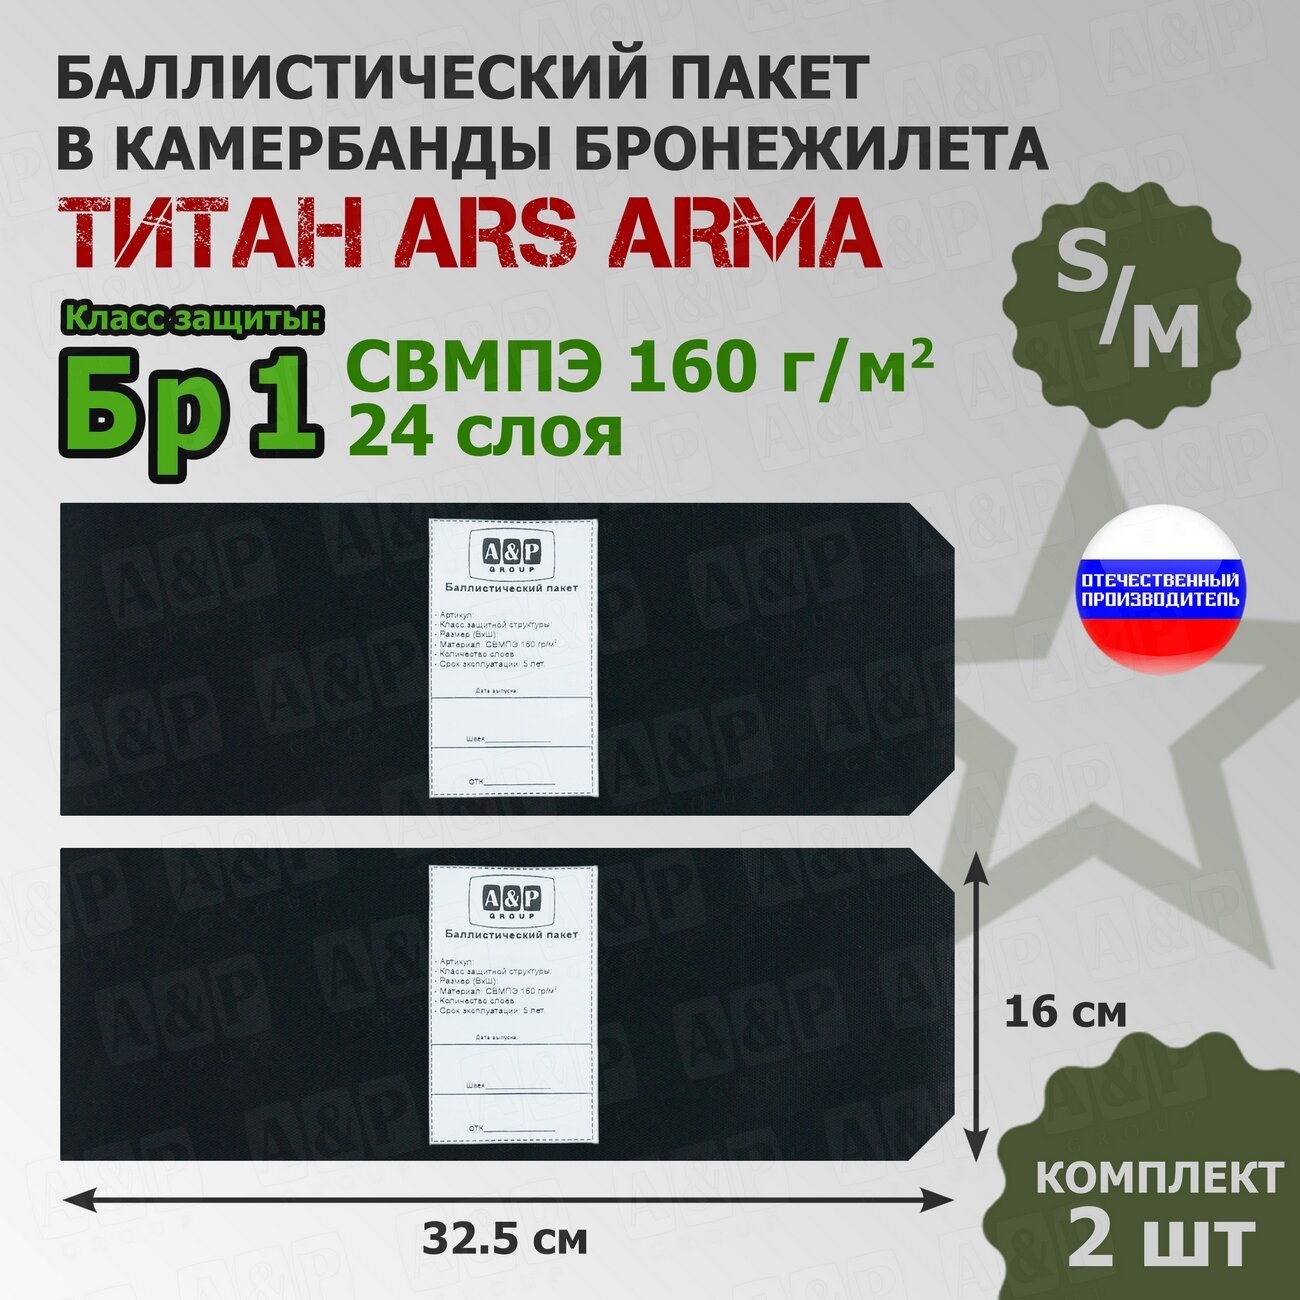 Баллистические пакеты в камербанды бронежилета Титан Ars Arma (размер S/M). 32,5x16 см. Класс защитной структуры Бр 1.